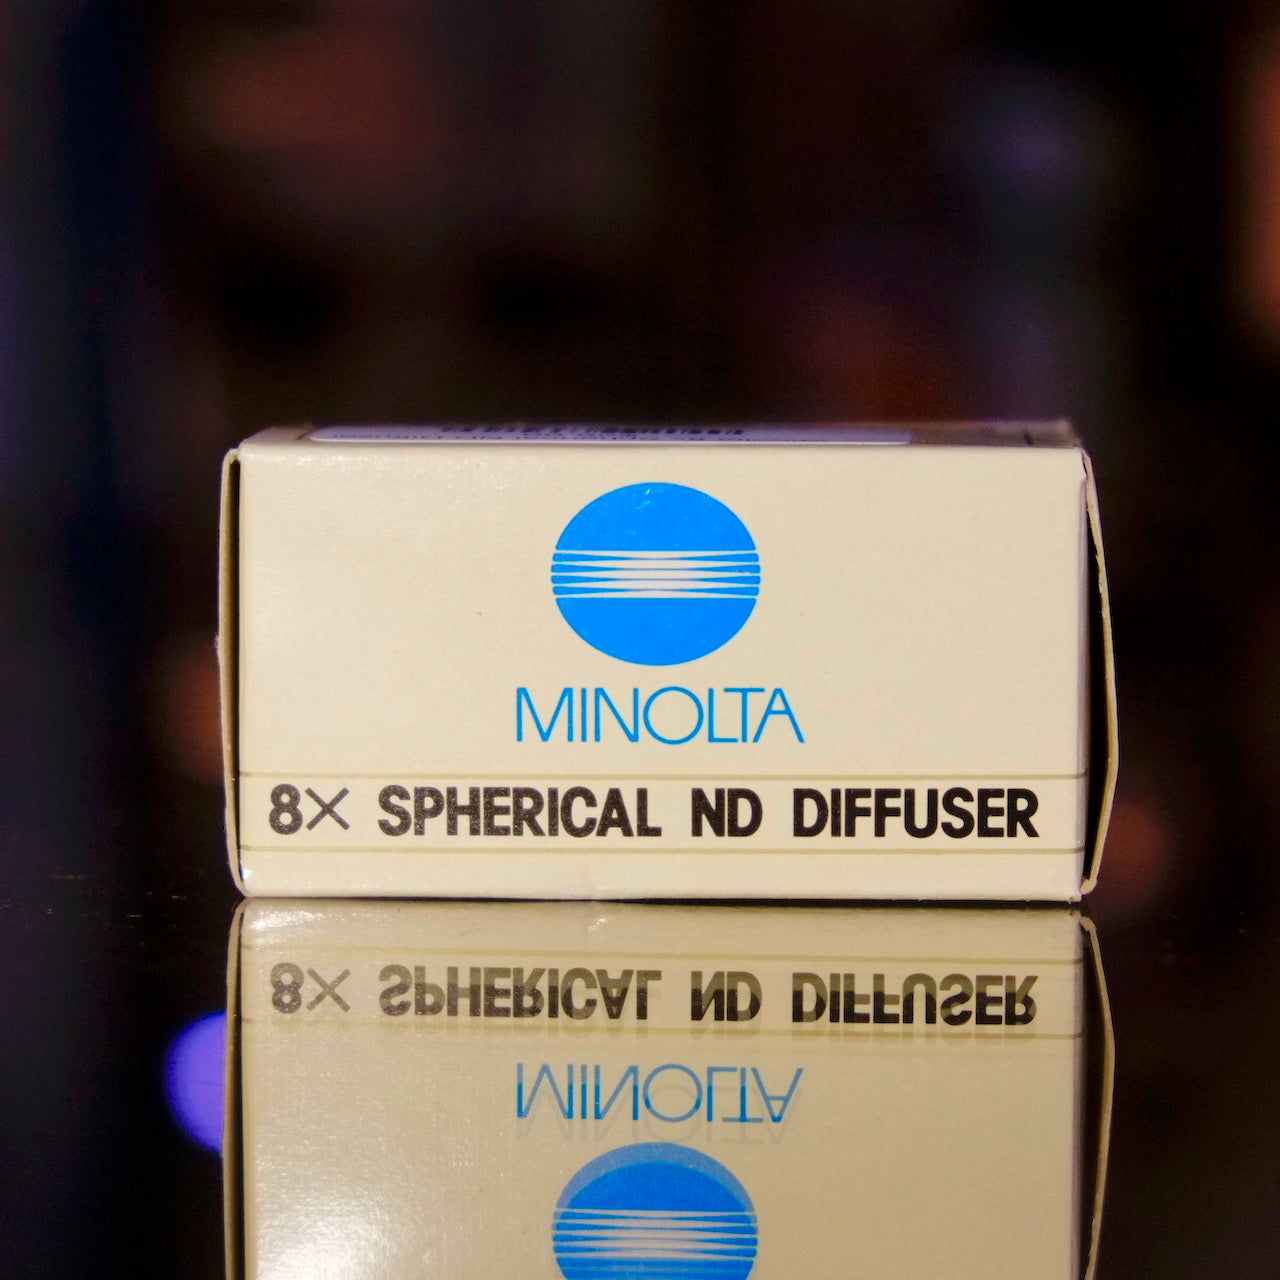 Minolta 8x Spherical ND Diffuser